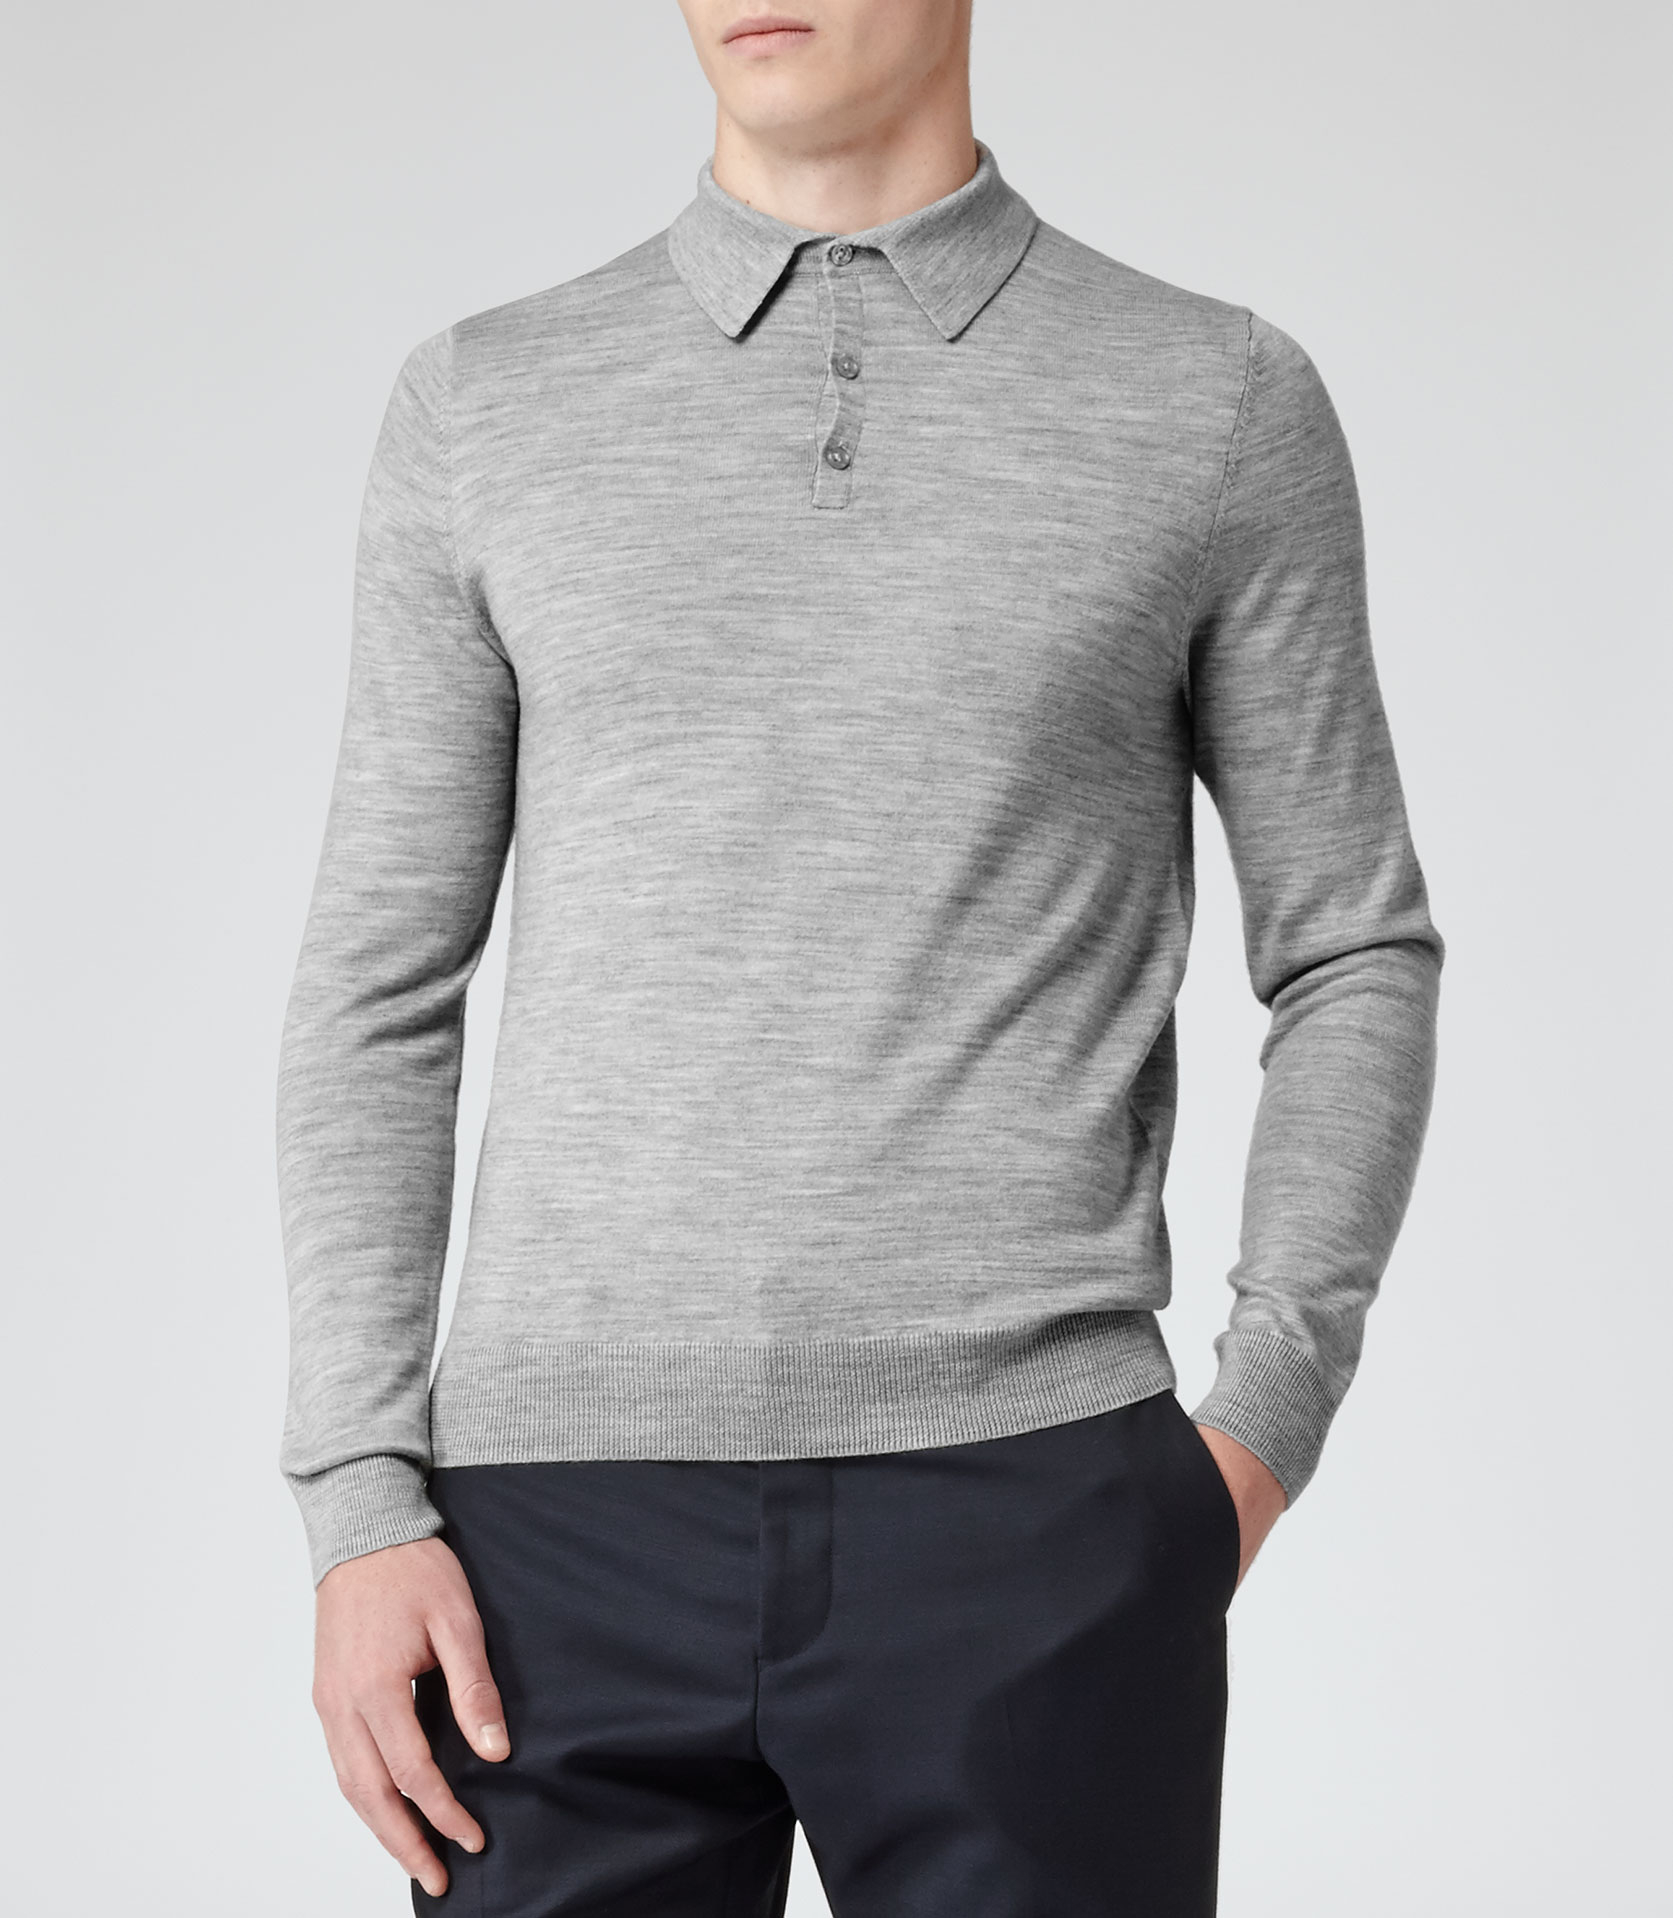 Lyst - Reiss Boulter Wool Polo Shirt in Gray for Men